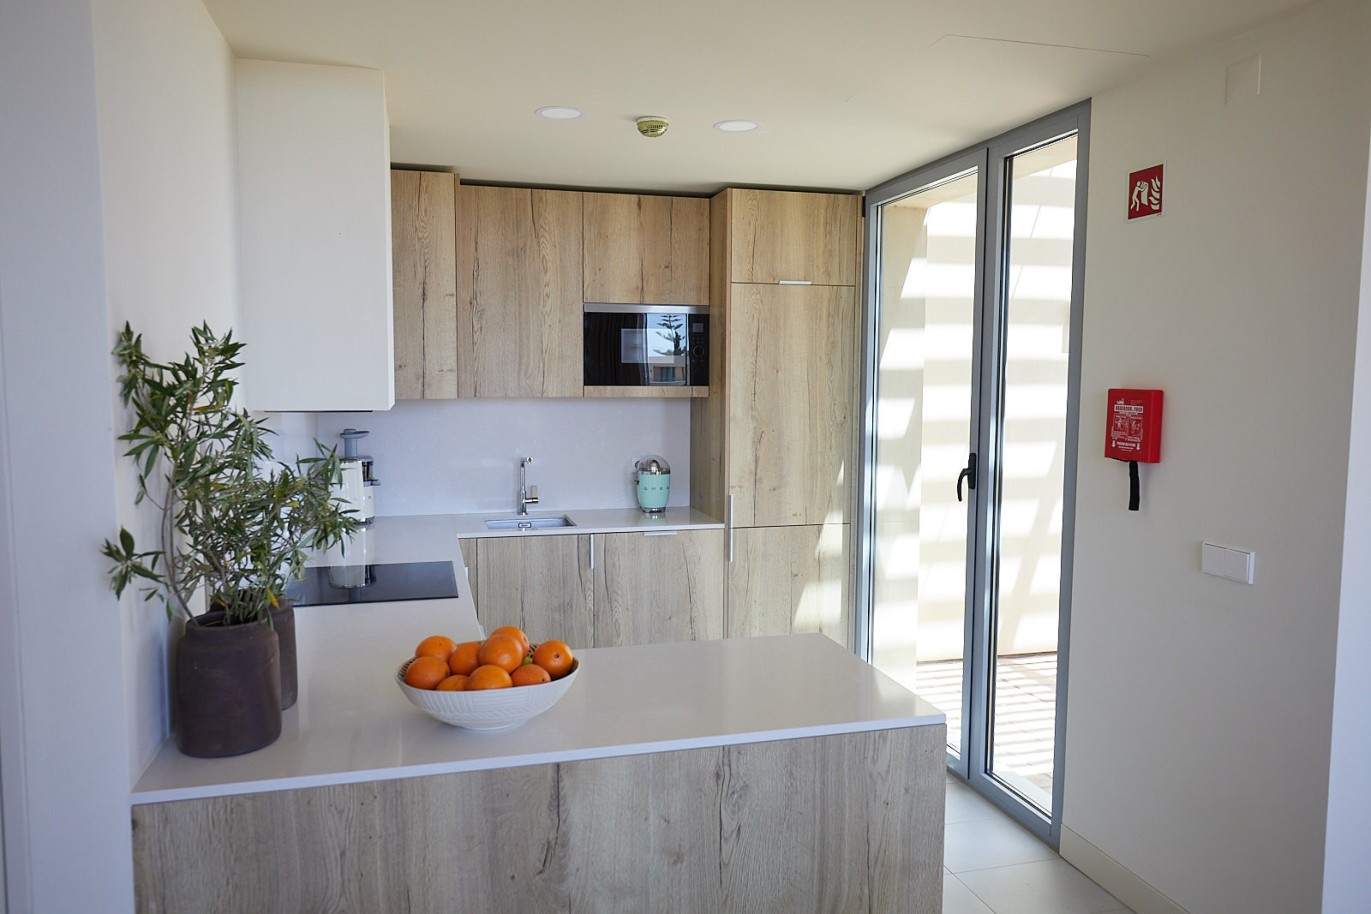 2 bedroom apartment in resort, for sale in Porches, Algarve_229164